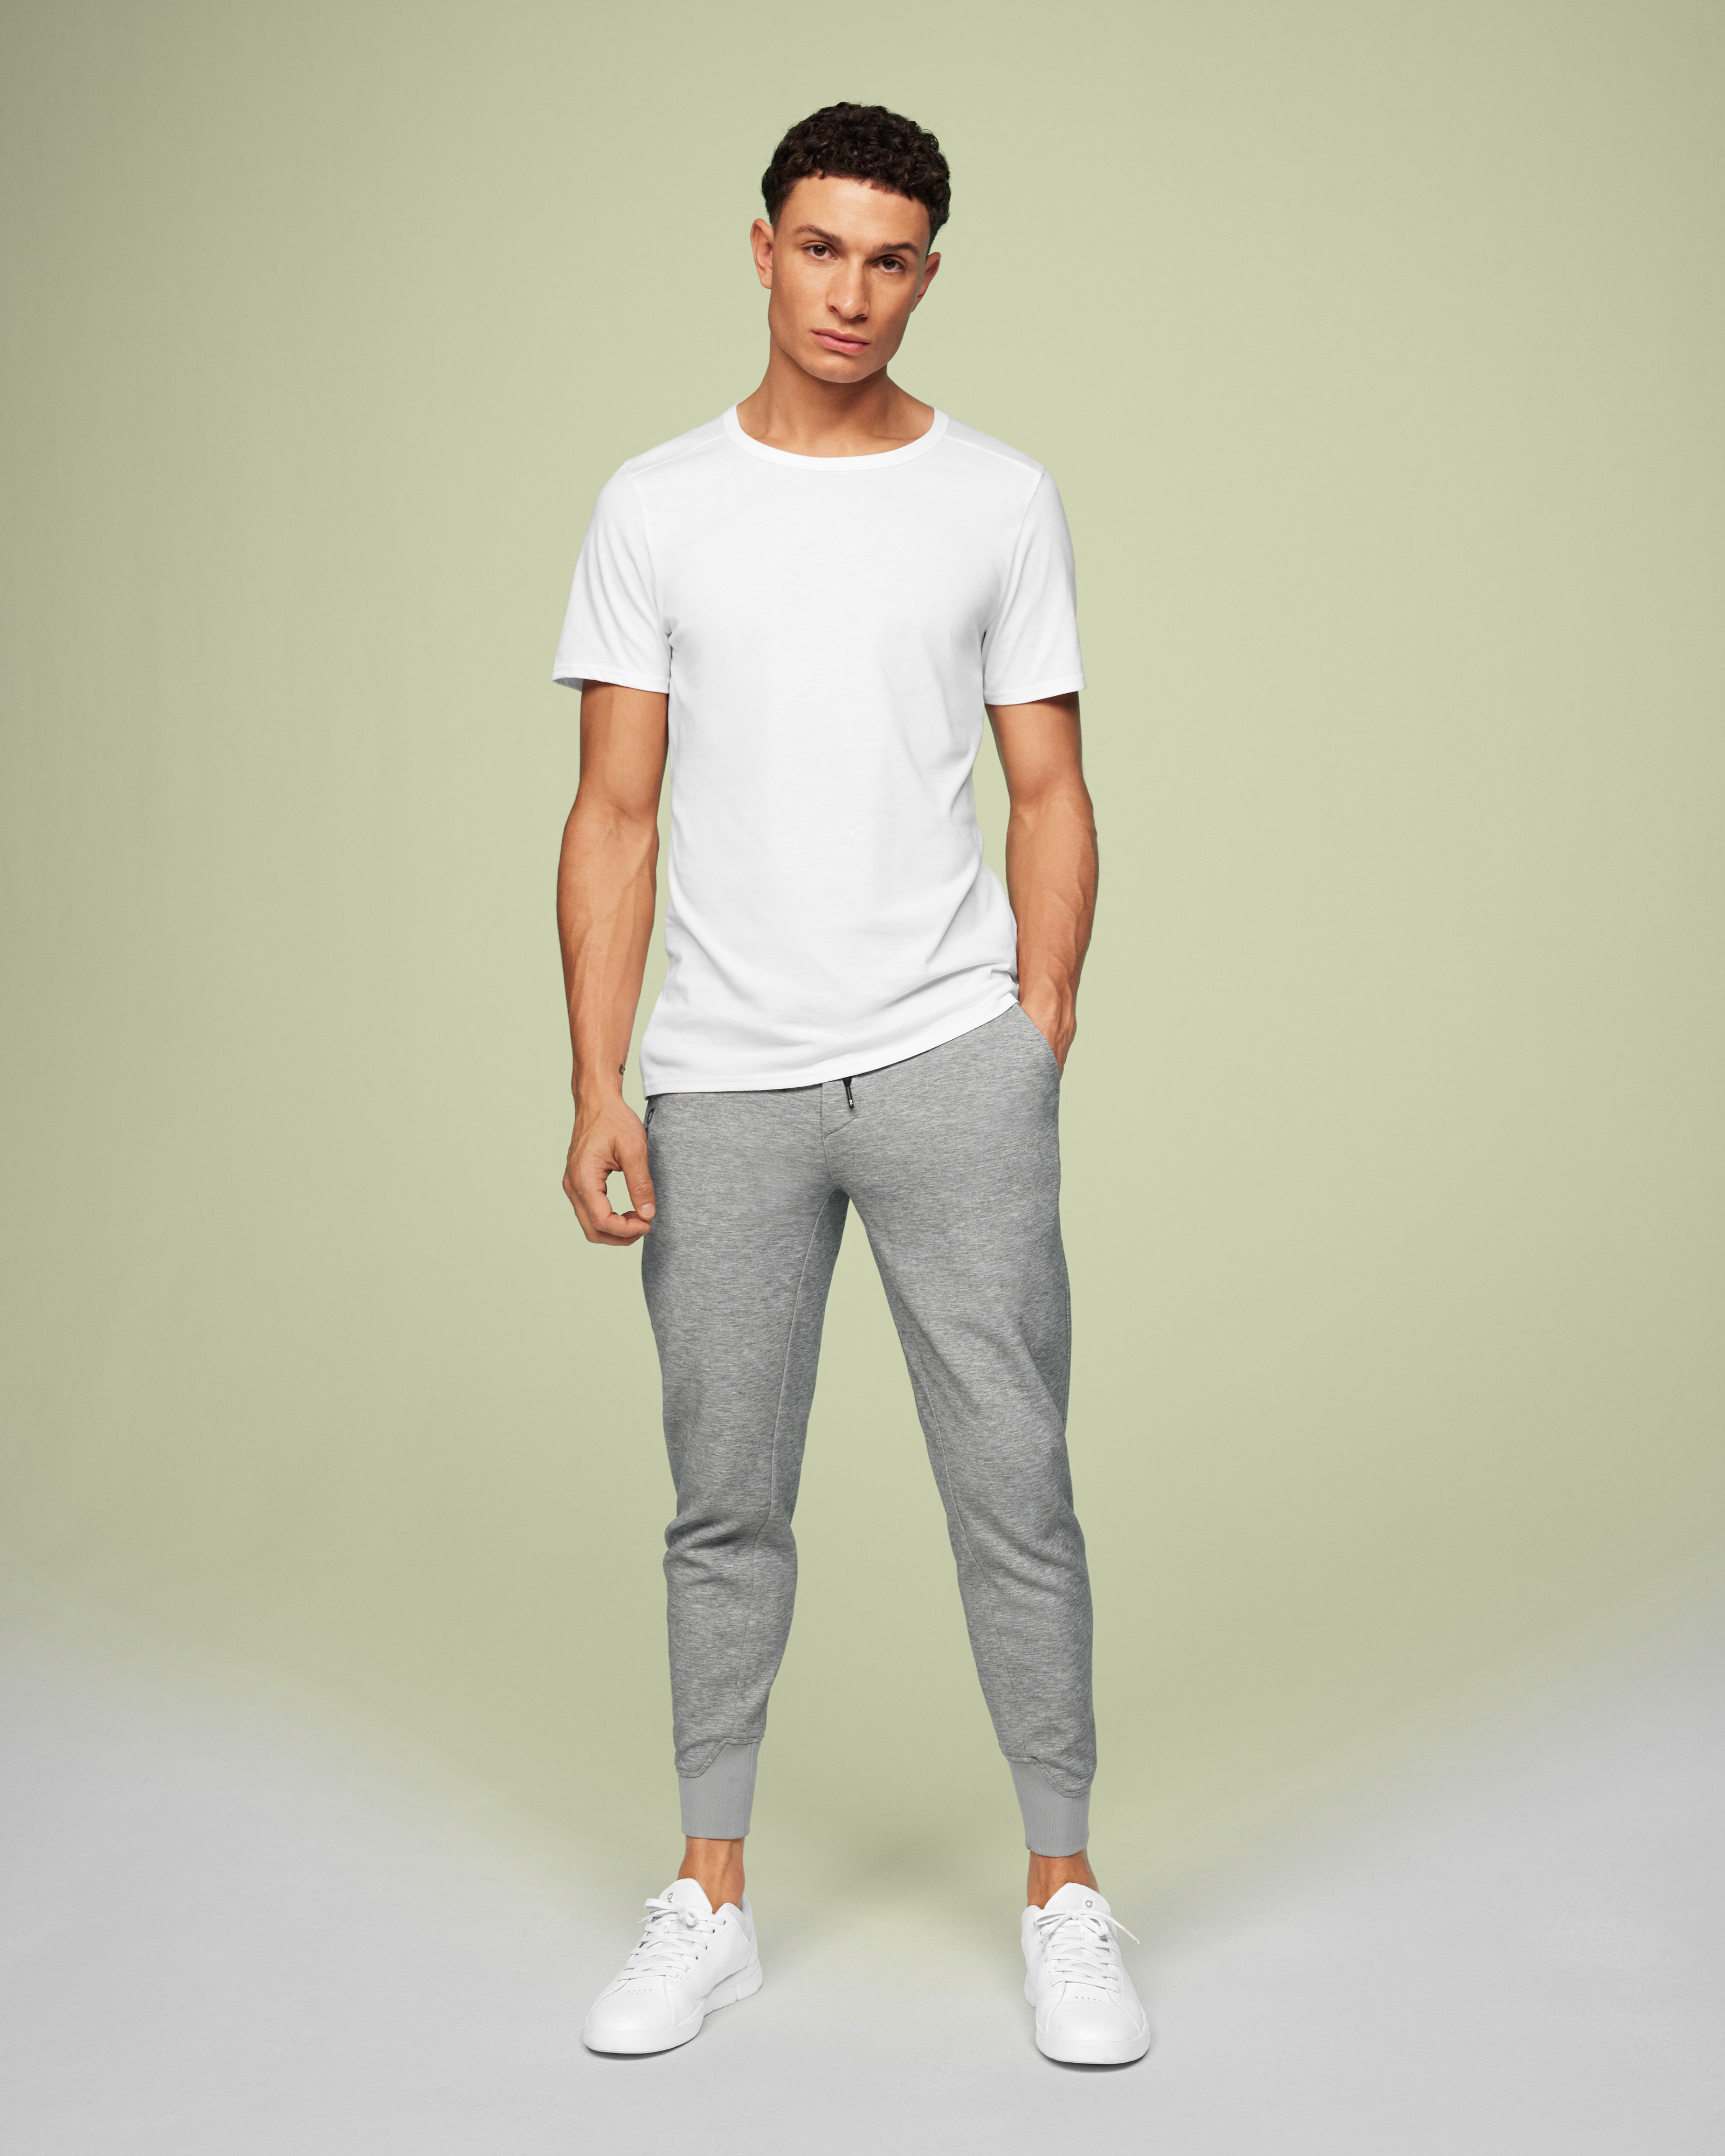 Smith & Jones Men's Wetherby Sweatpants - Light Grey Marl Clothing